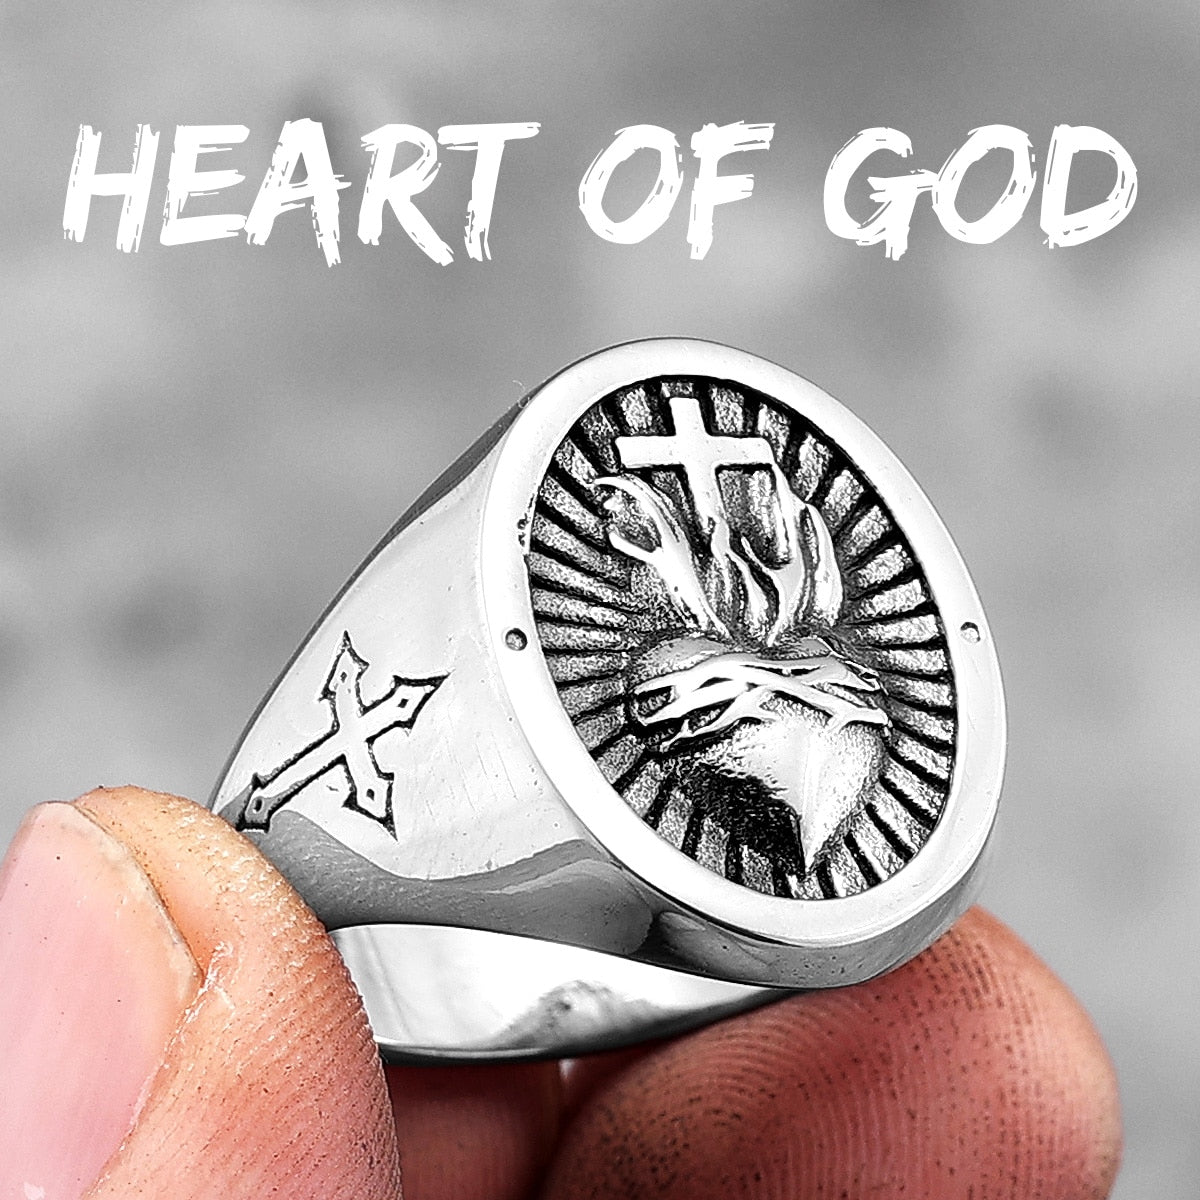 Heart of God Ring Religion Cross 316L Stainless Steel Mens Rings Amulet Rock for Male Boyfriend Biker Jewelry Gift Dropshipping R770-Heart Of God